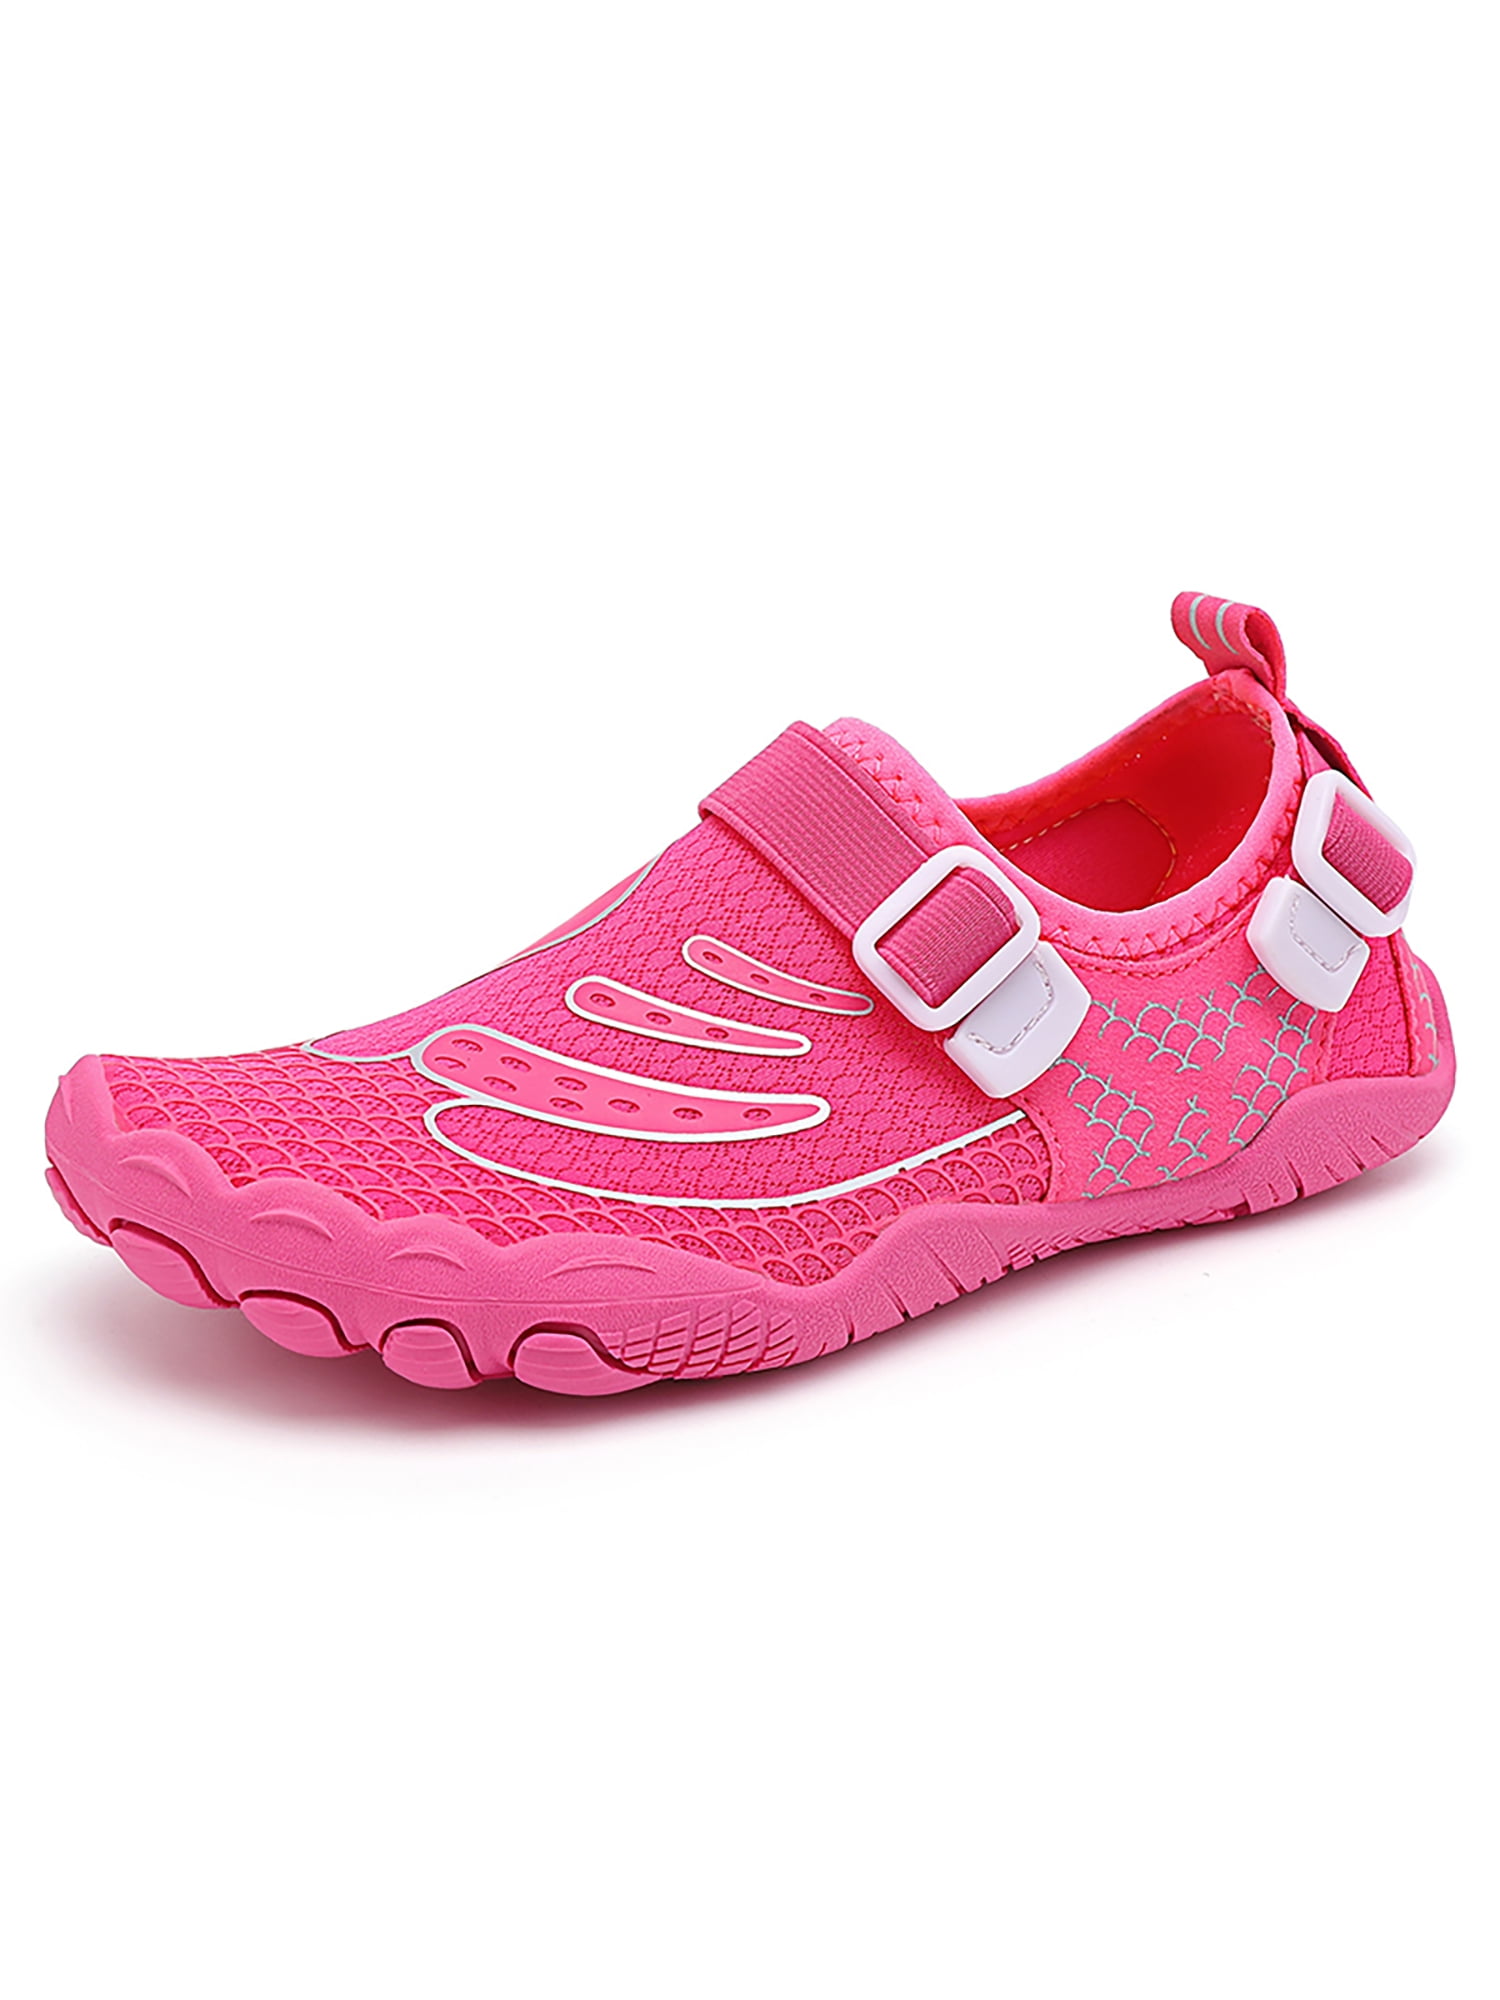 SIMANLAN Girls Boys Aqua Socks Quick Dry Swim Beach Shoe Barefoot Water ...